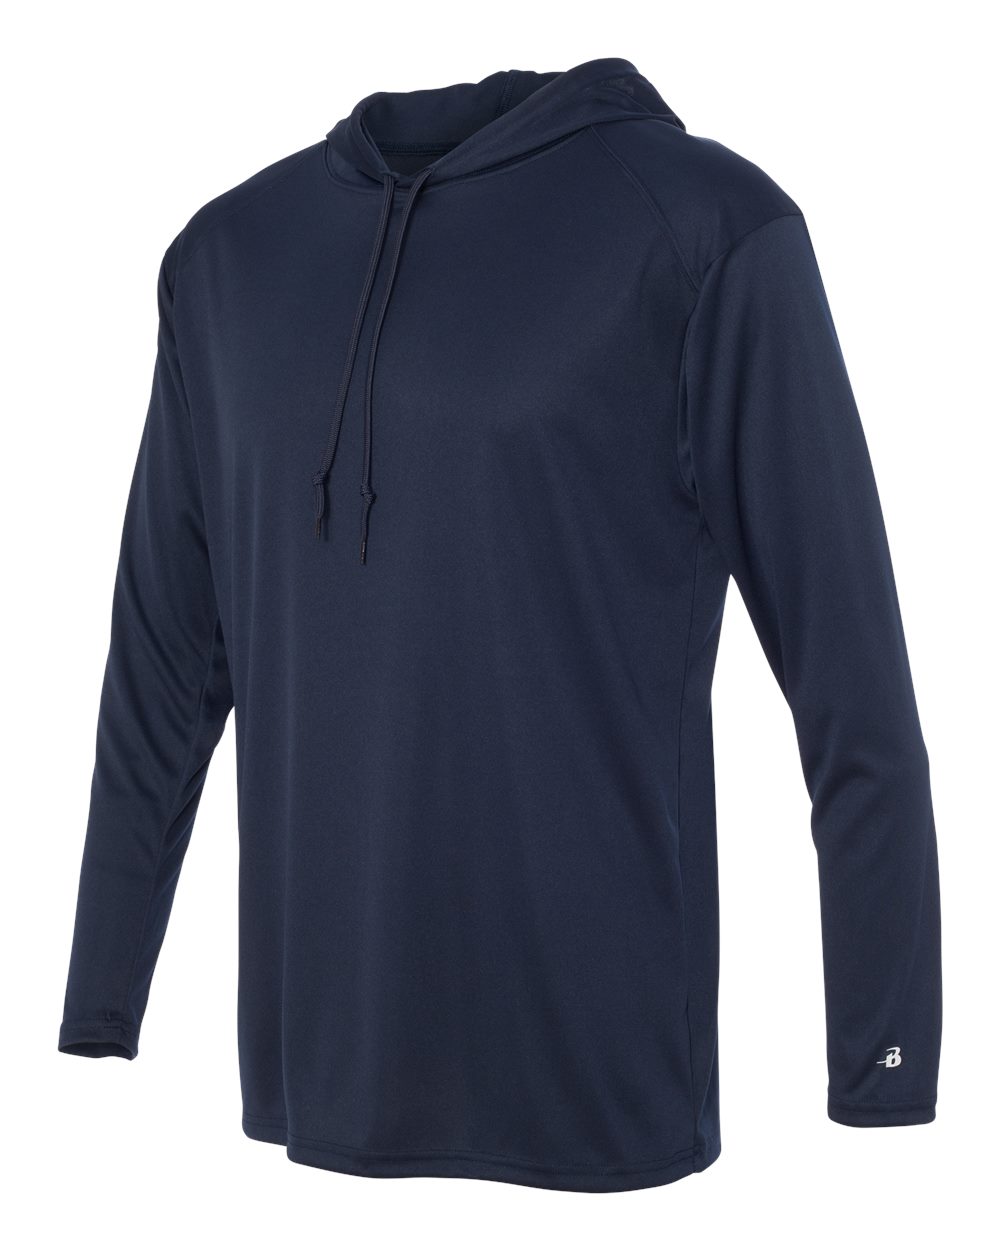 Badger 4105 - B-Core Long Sleeve Hooded T-Shirt $16.12 - Woven/Dress Shirts